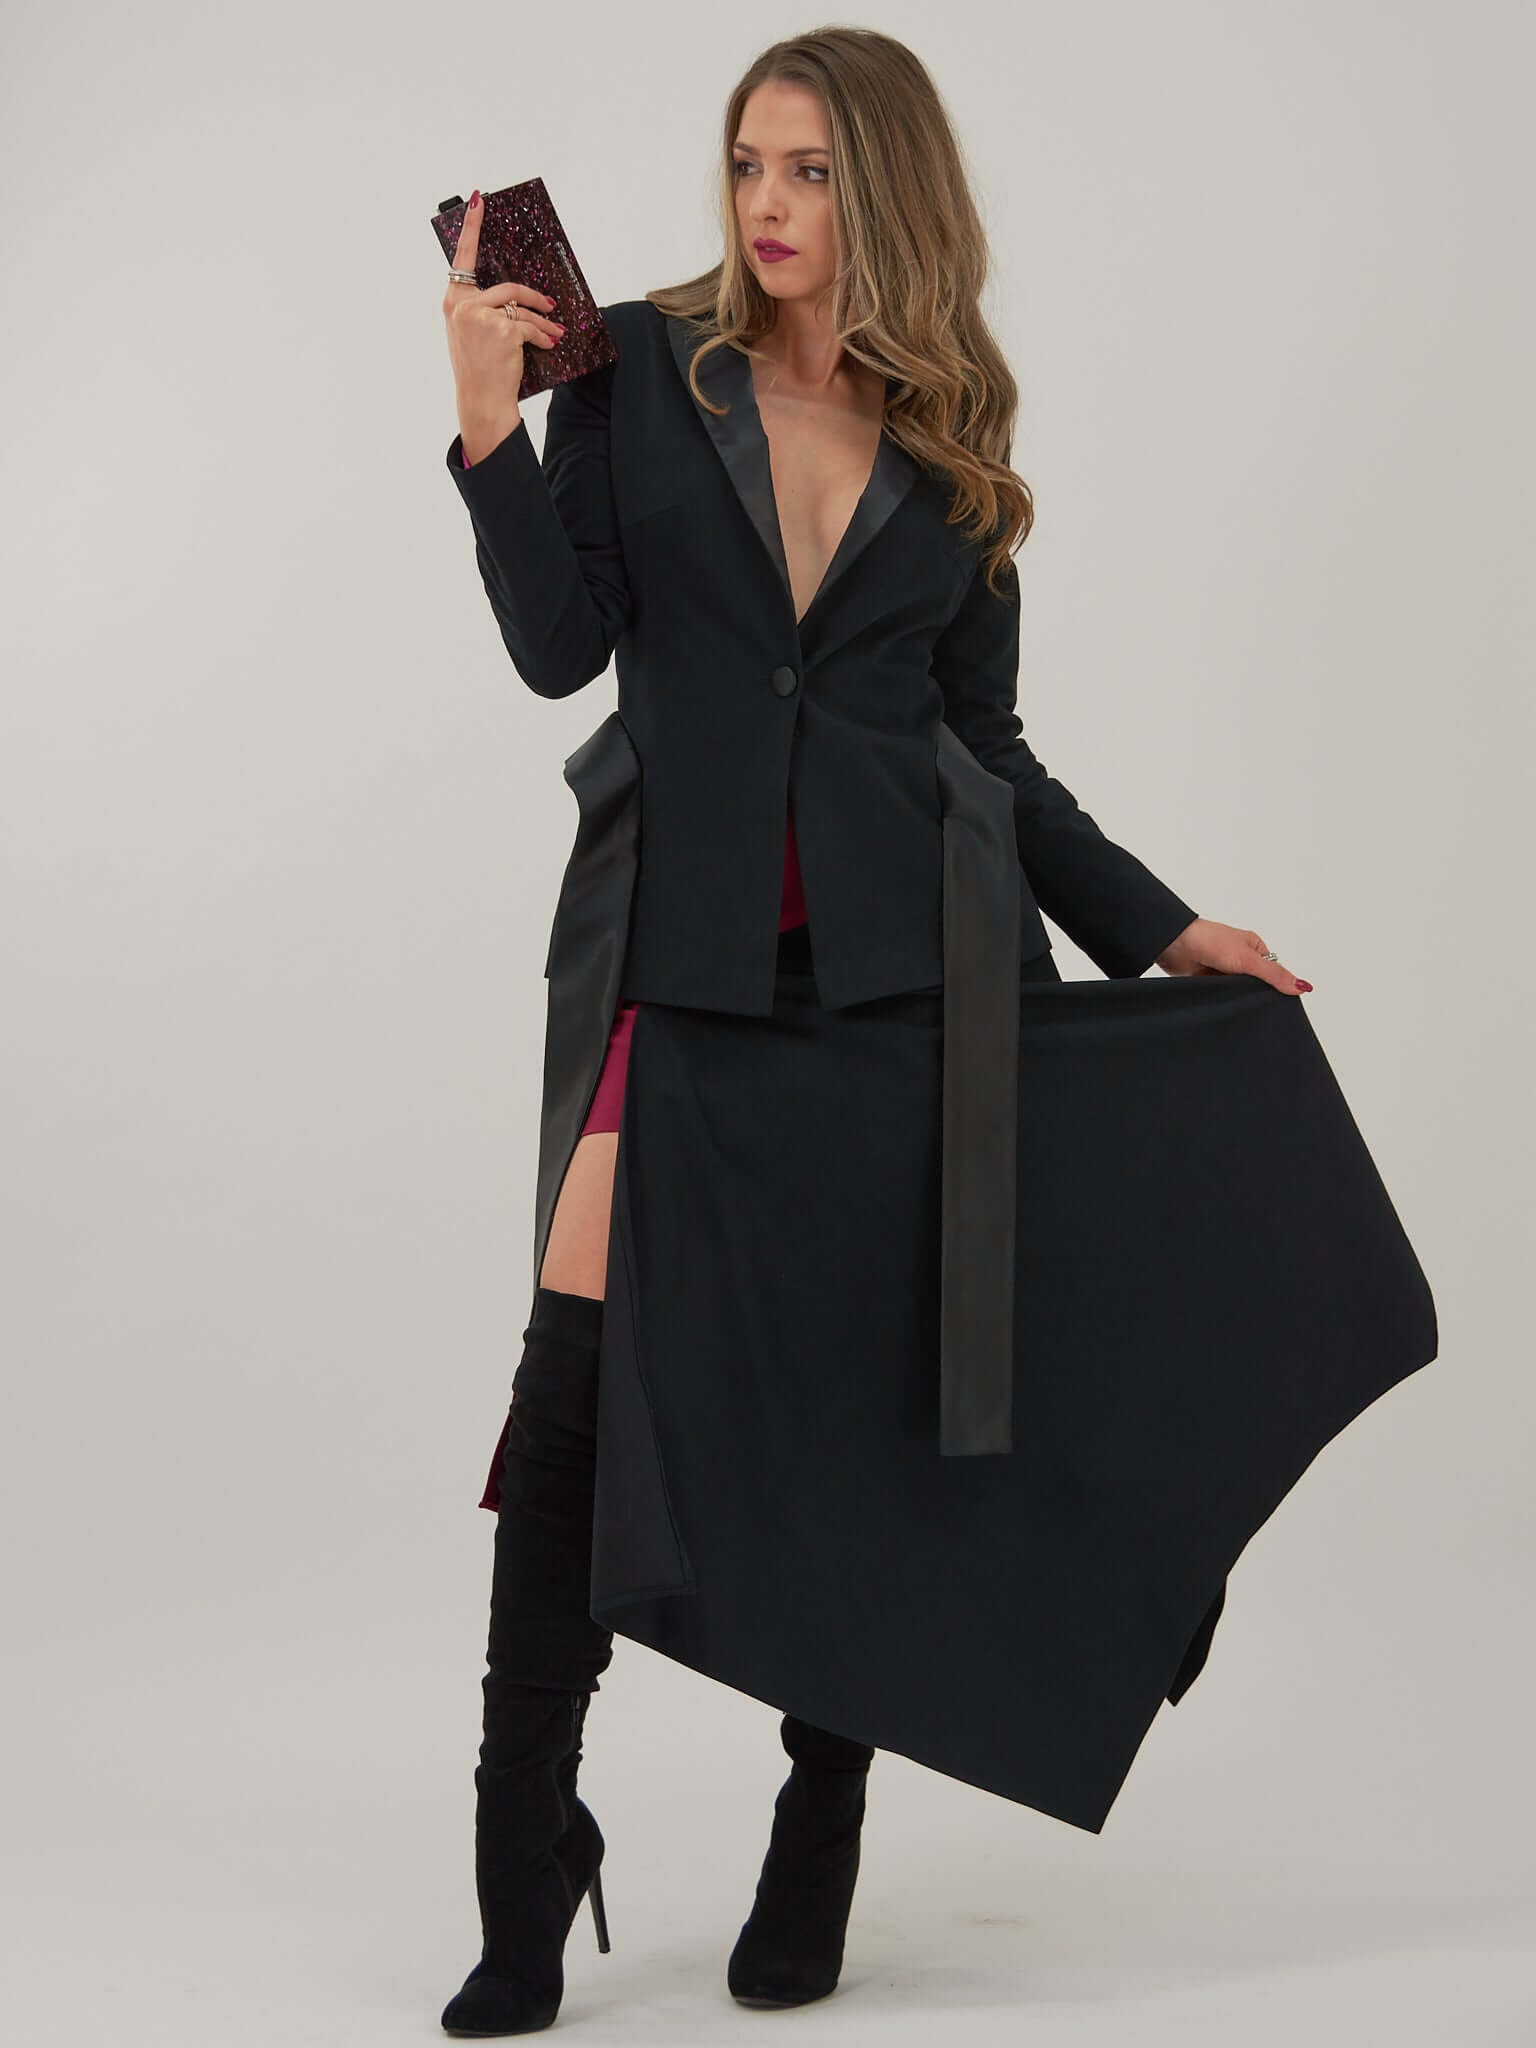 Suit It Up Classic Blazer with Satin Details by Tia Dorraine Women's Luxury Fashion Designer Clothing Brand